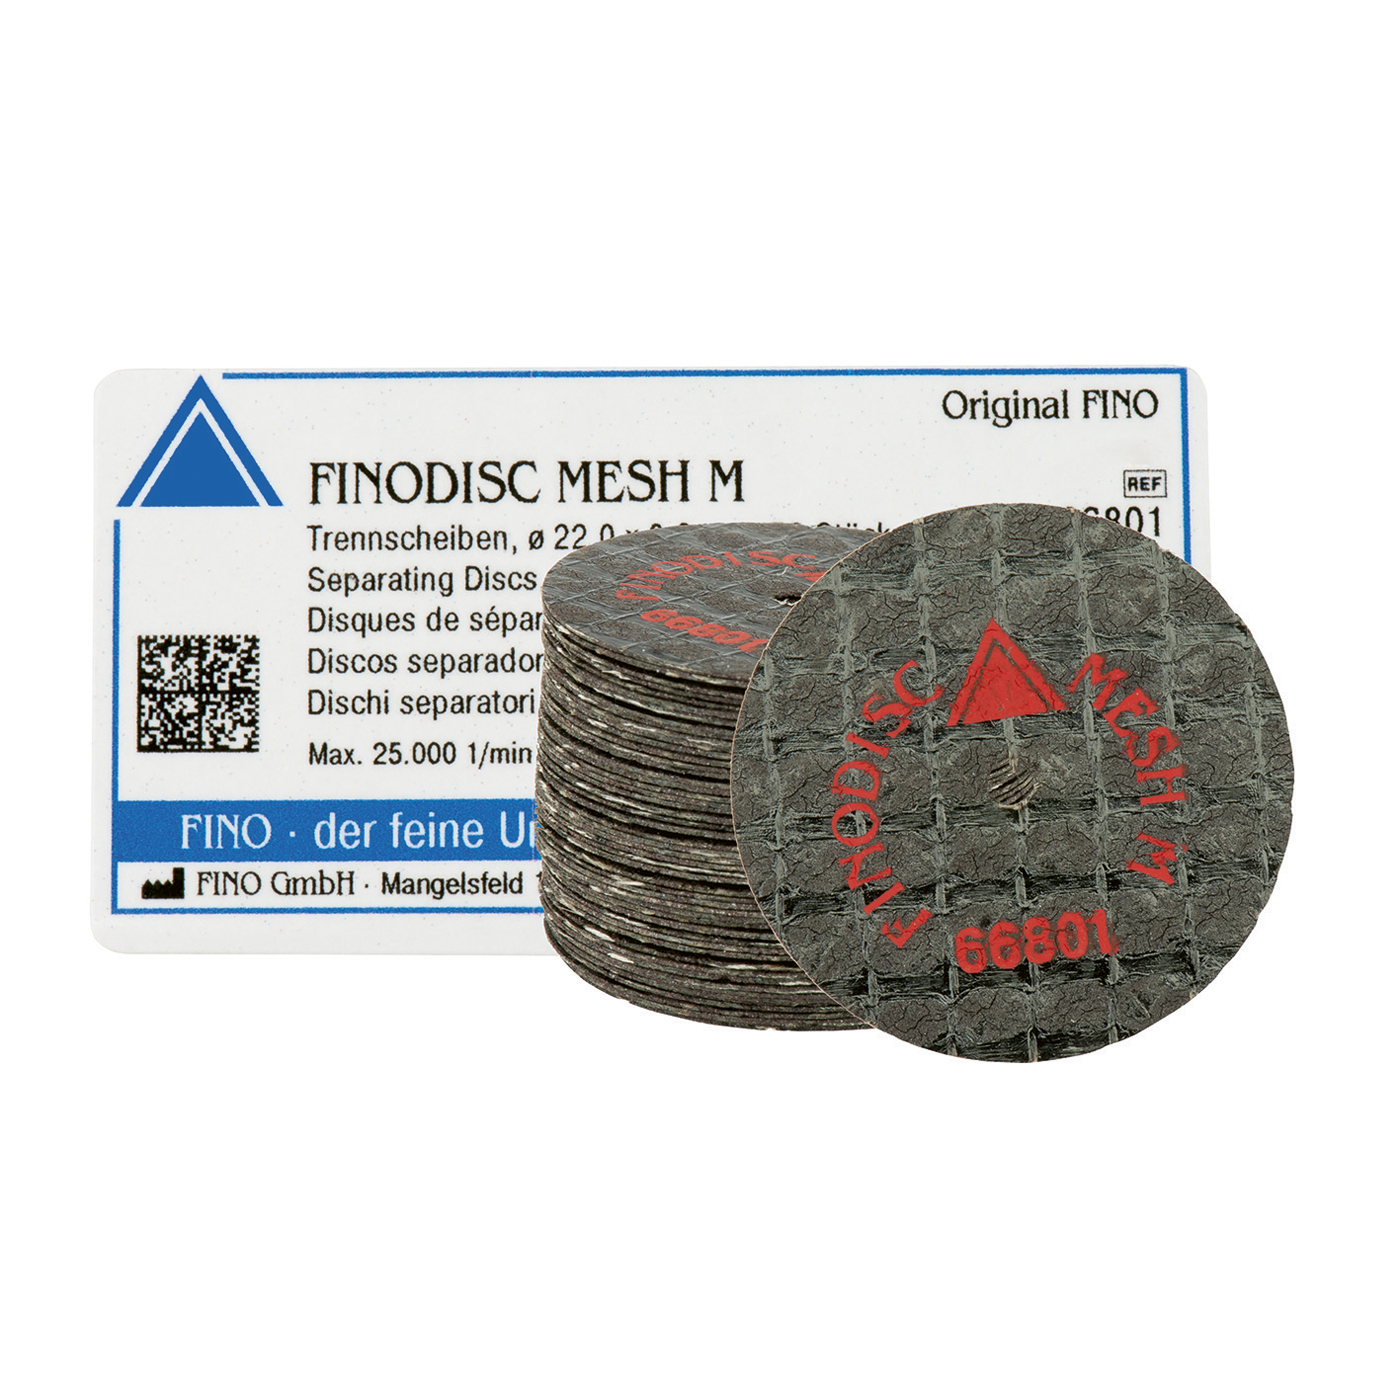 FINODISC MESH M Separating Discs, ø 22 x 0.2 mm - 50 pieces